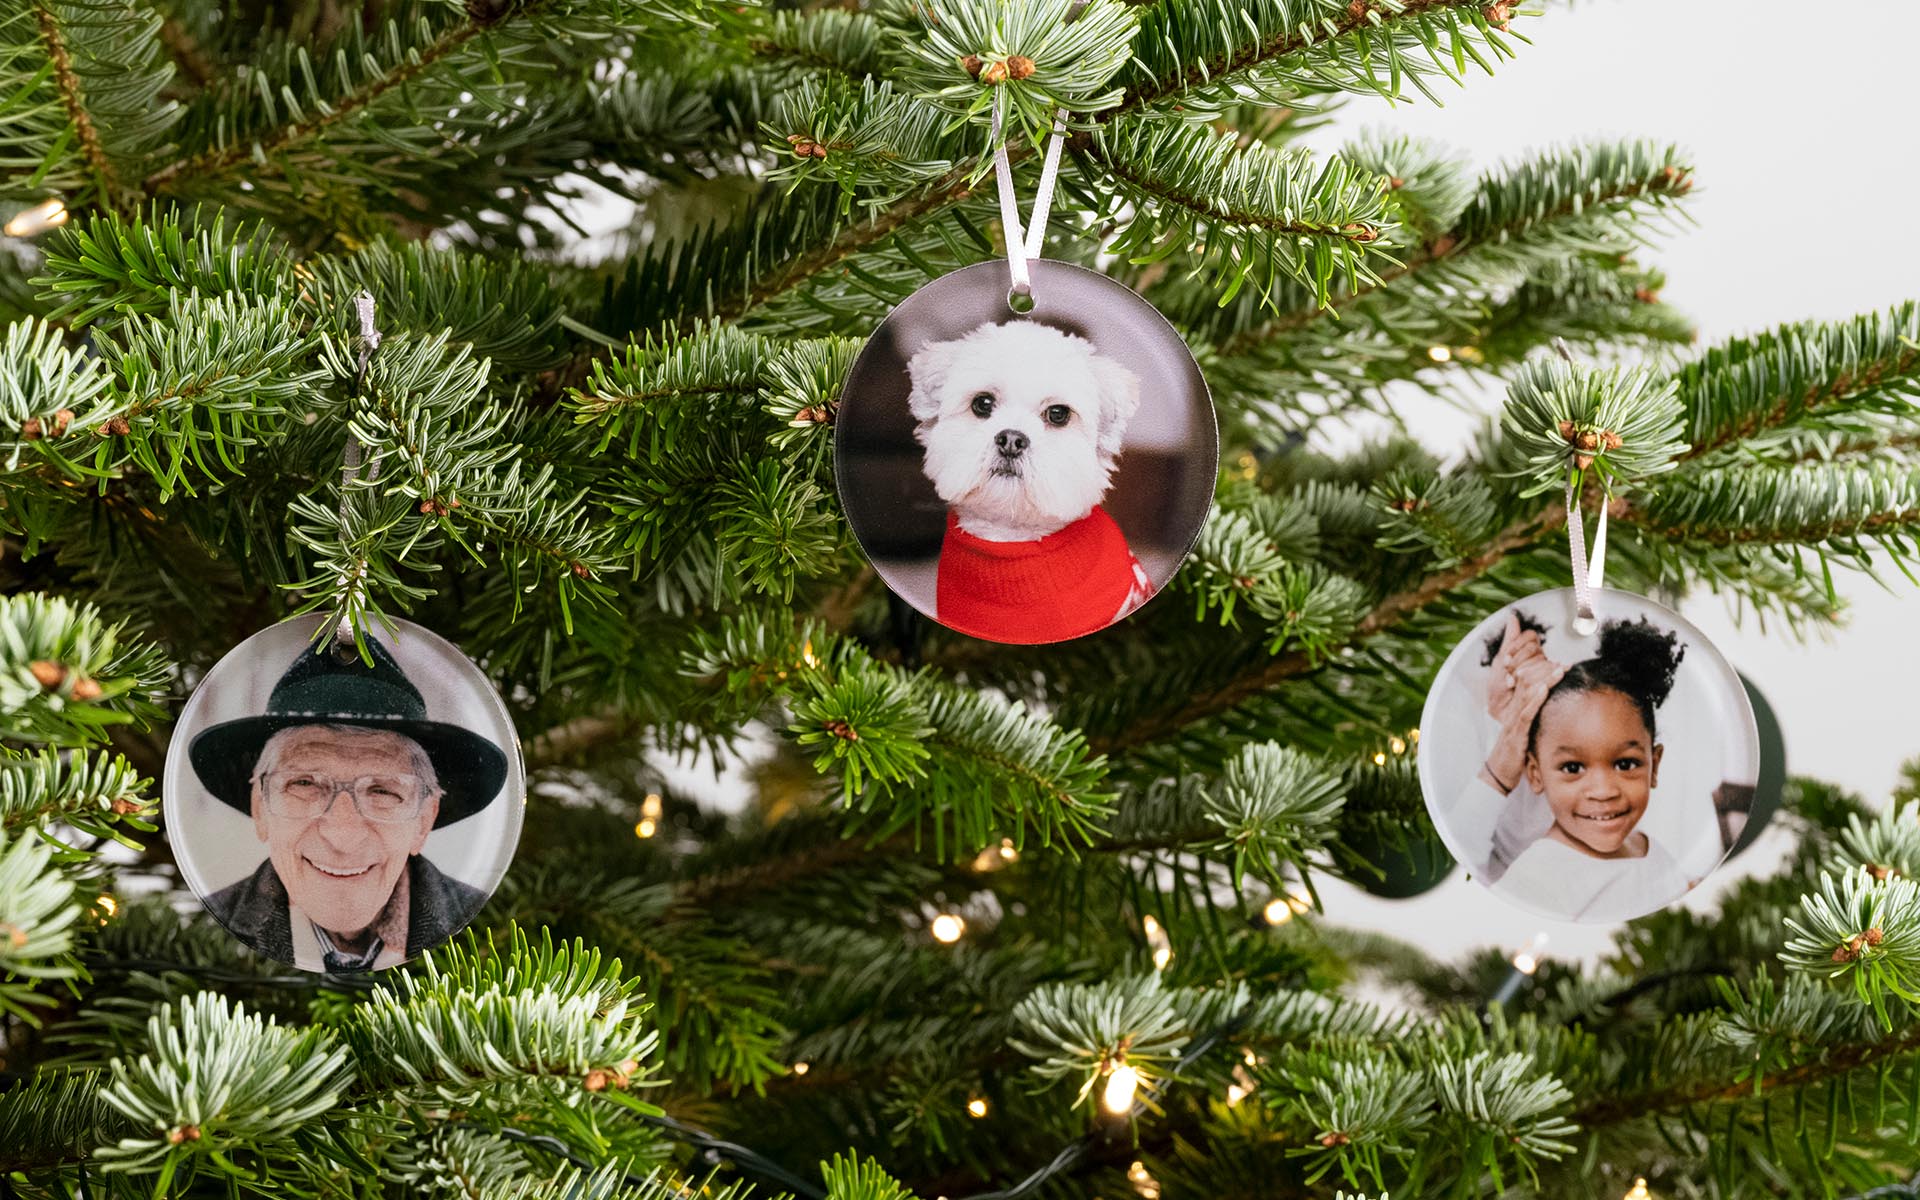 Popsa ornaments on a Christmas tree